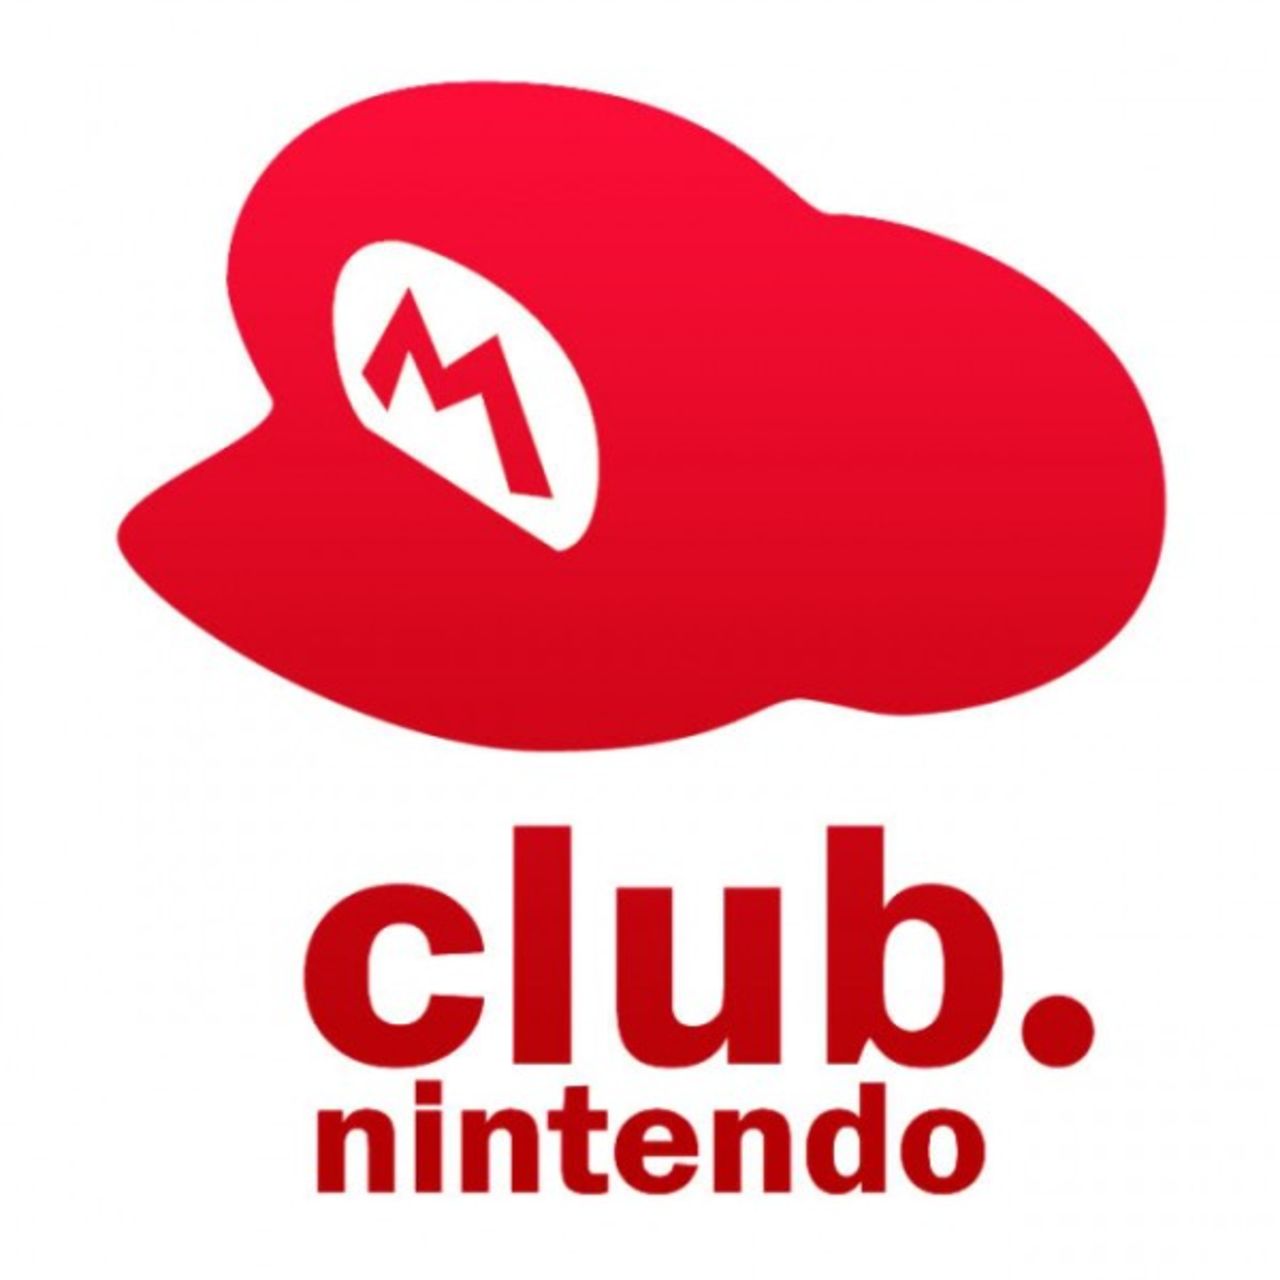 This months Club Nintendo digital download awards